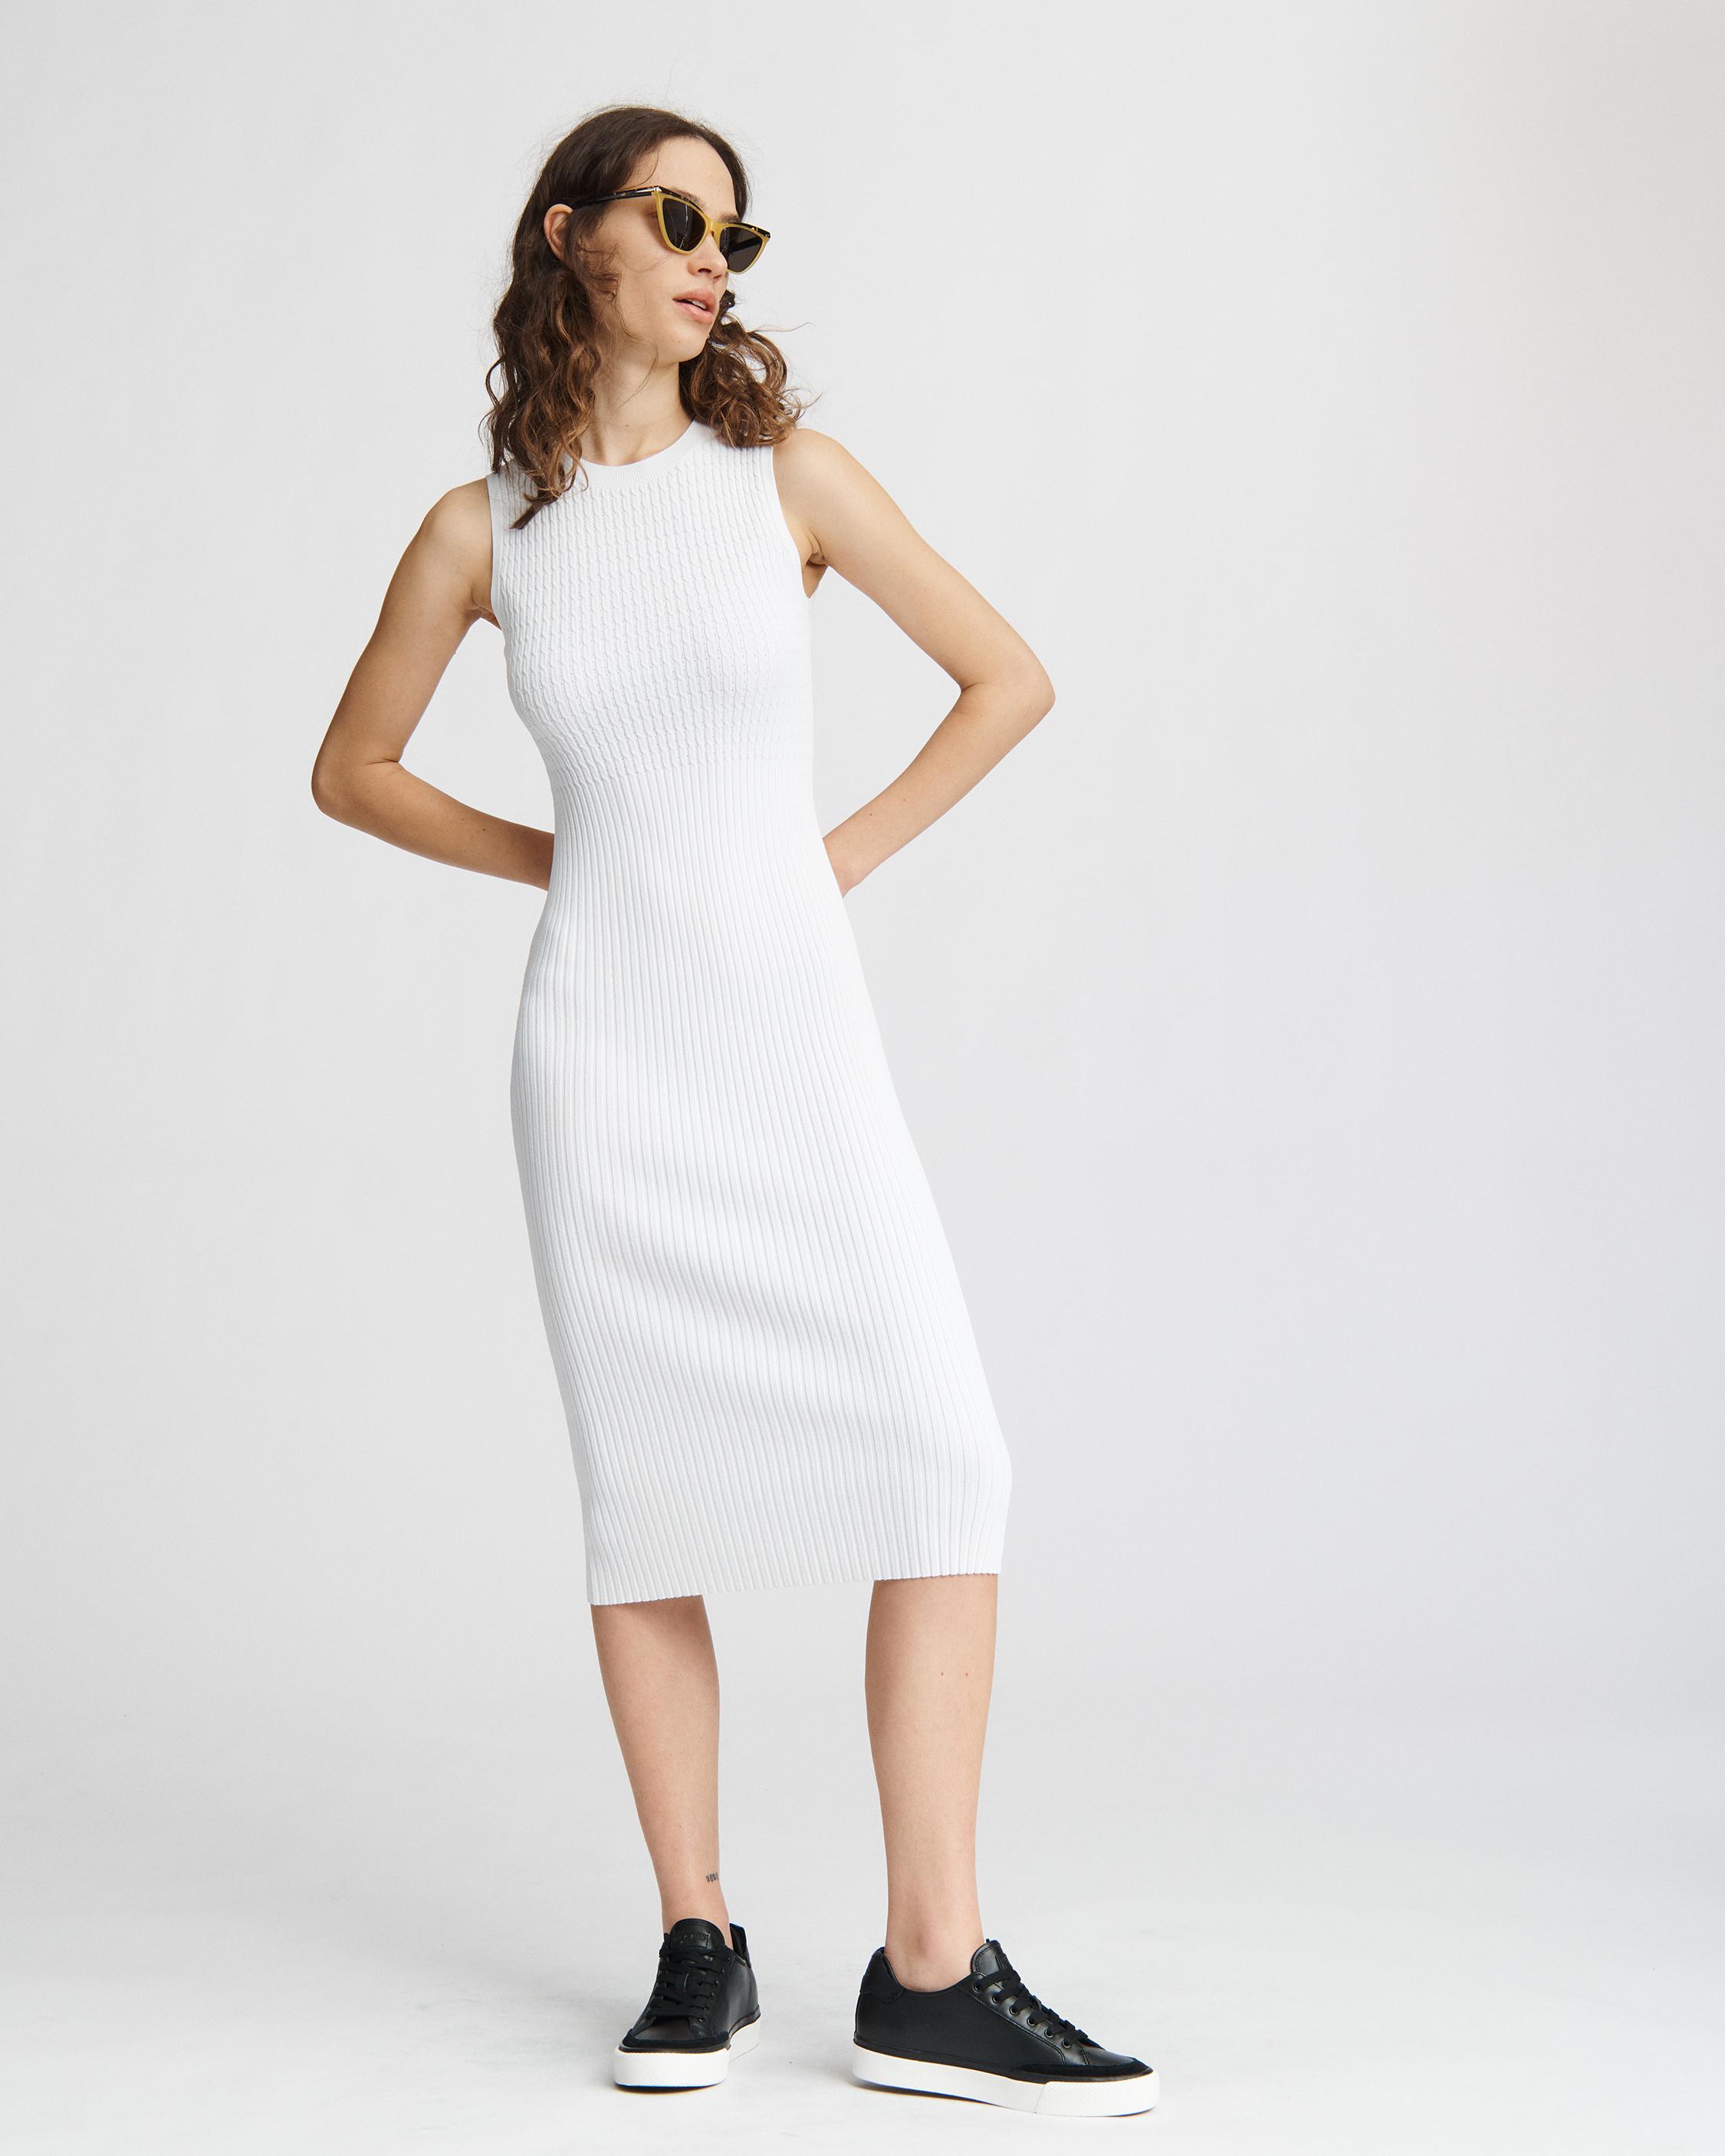 Brea Sleeveless Rib-Knit Dress in White 